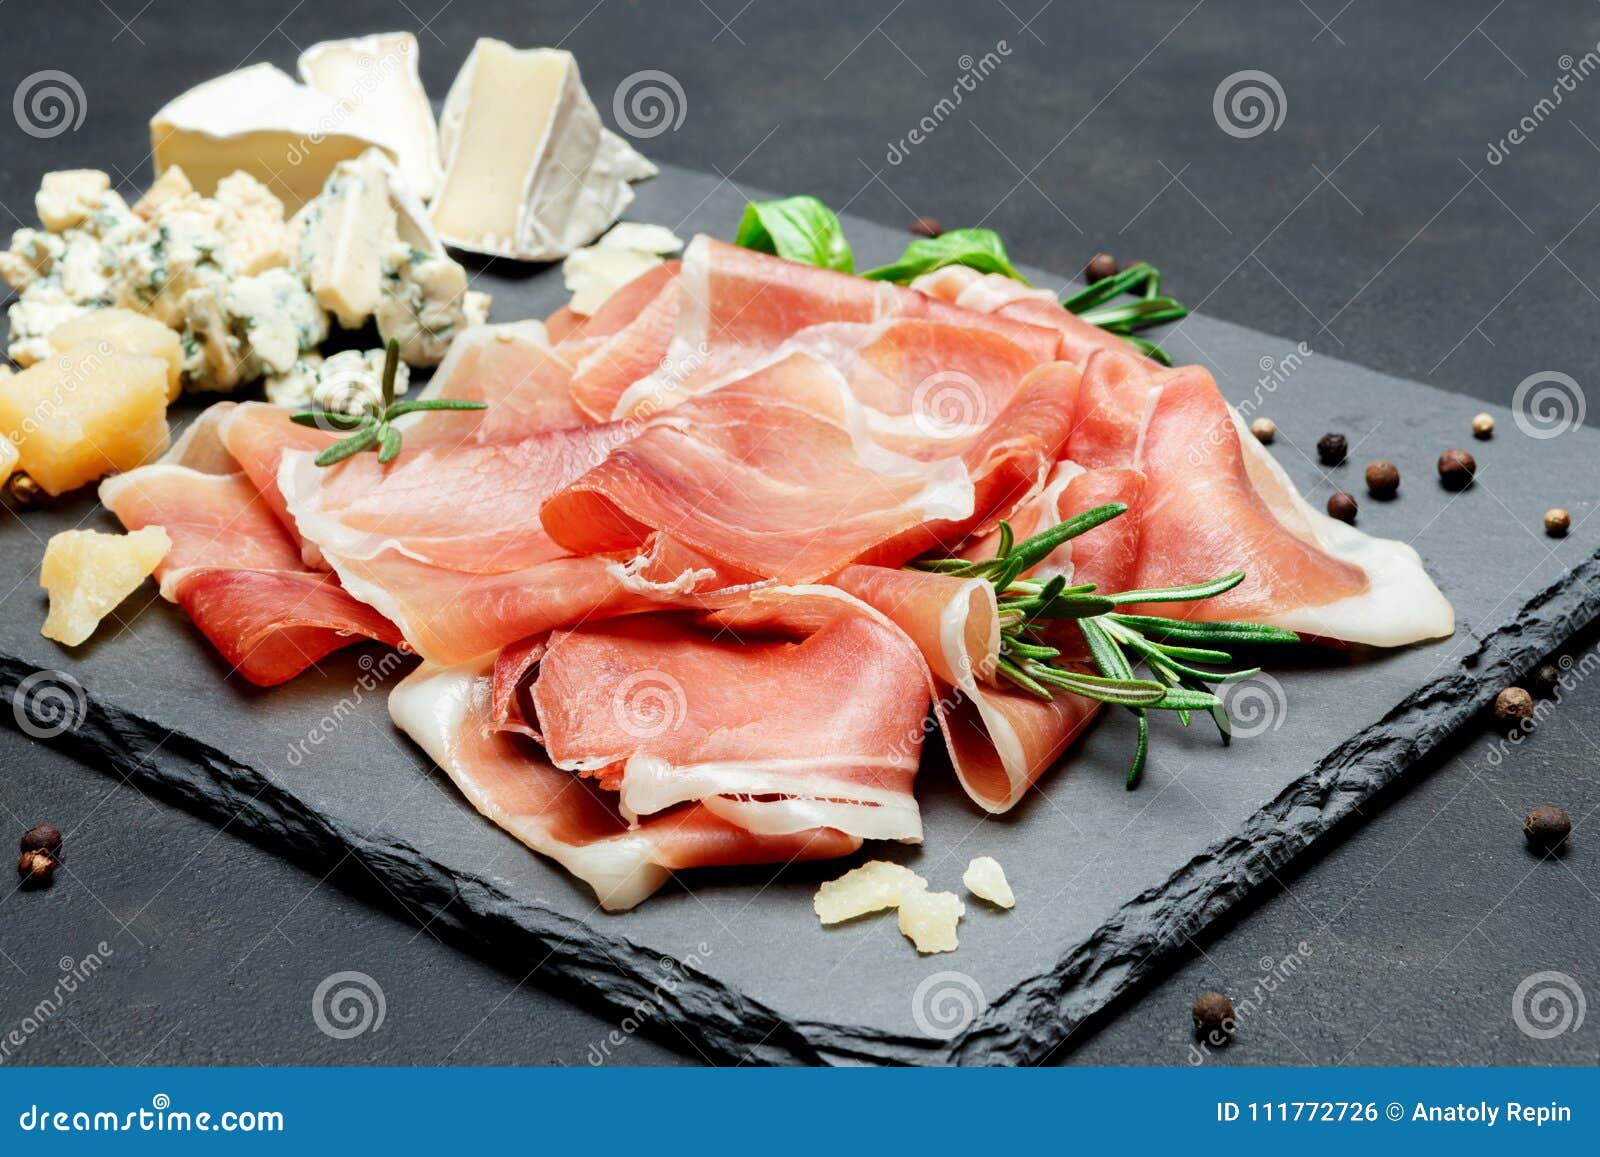 italian prosciutto crudo or spanish jamon and cheese